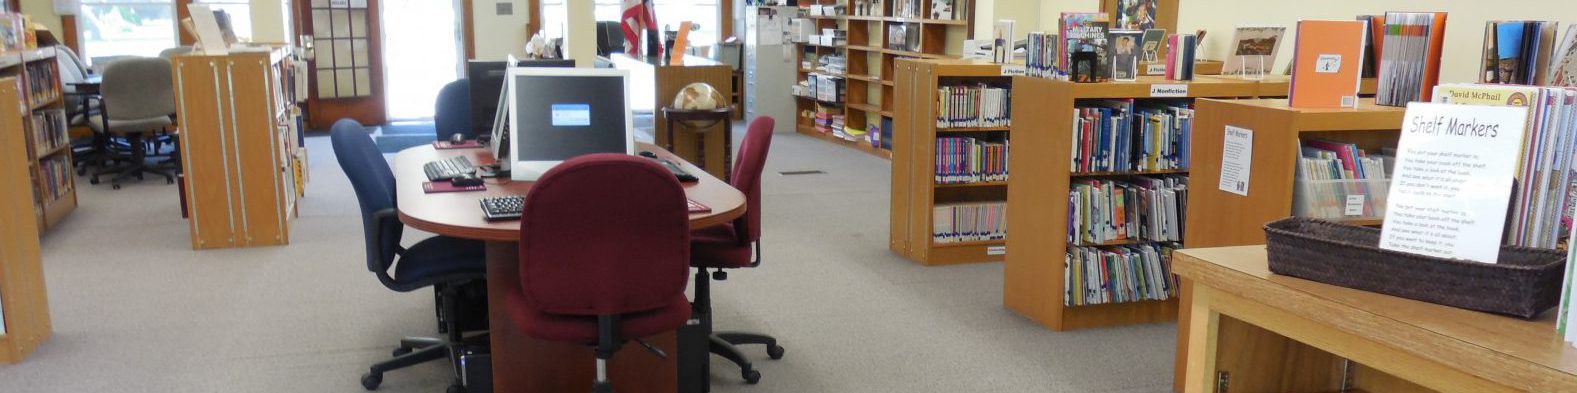 Dakota City Public Library